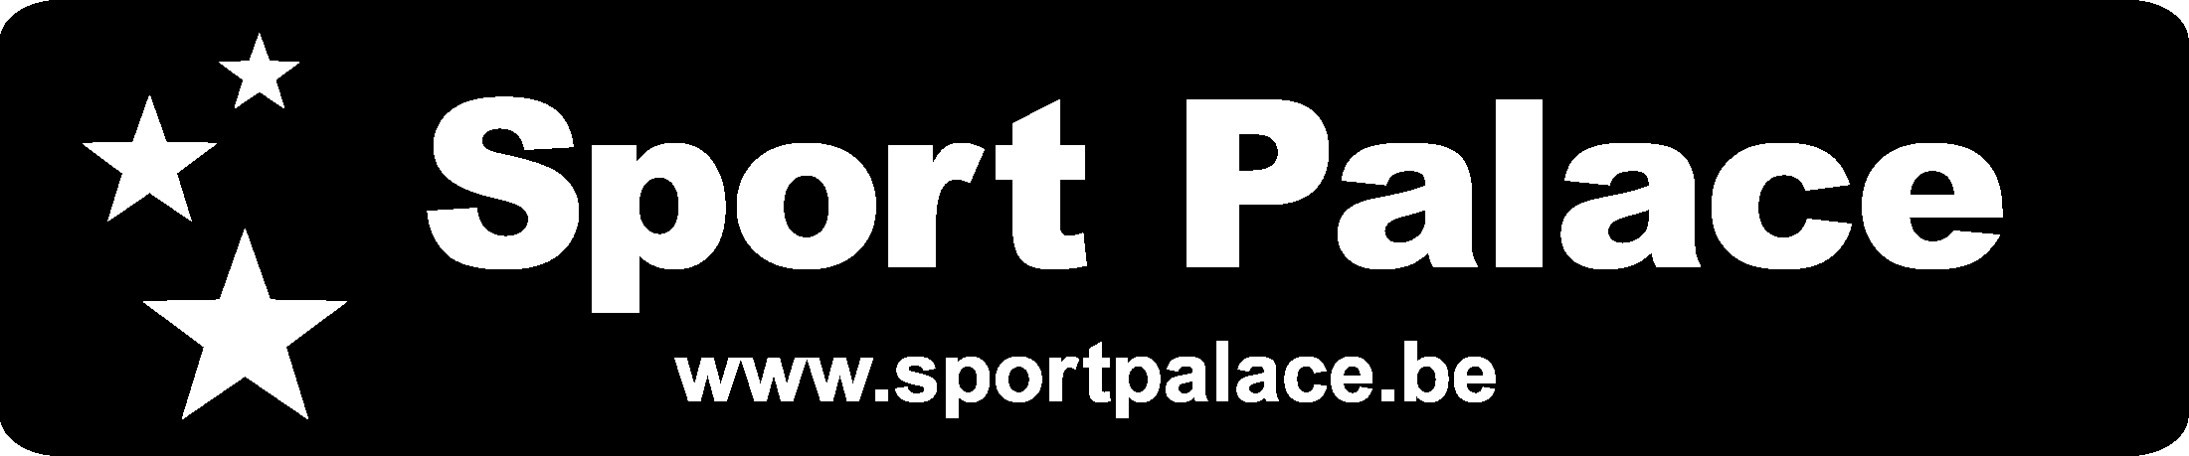 Sport Palace